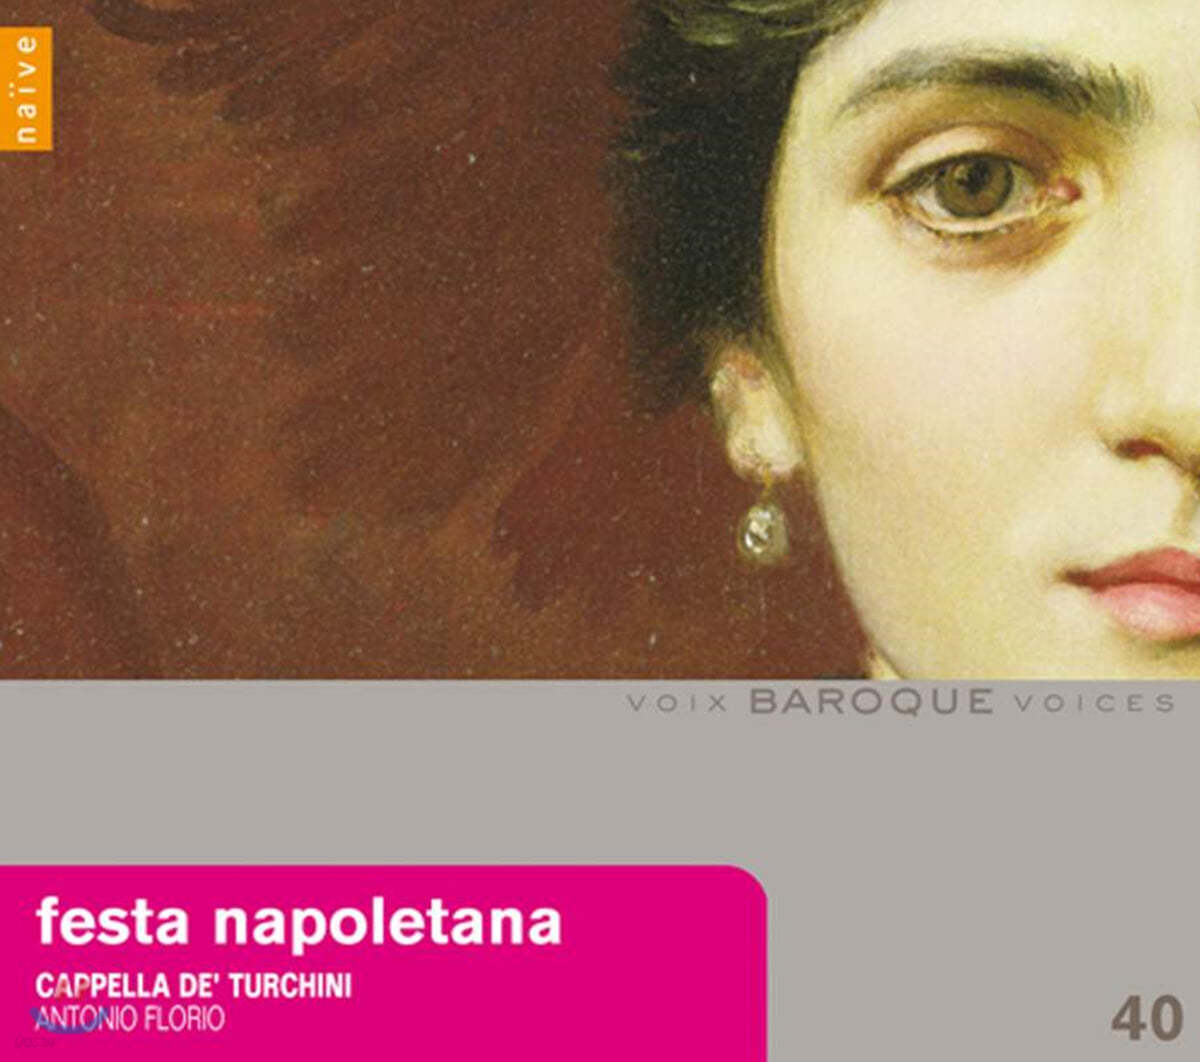 Antonio Florio 나폴리의 축제 - 테소리 디 나폴리 12권 (Festa Napoletana)